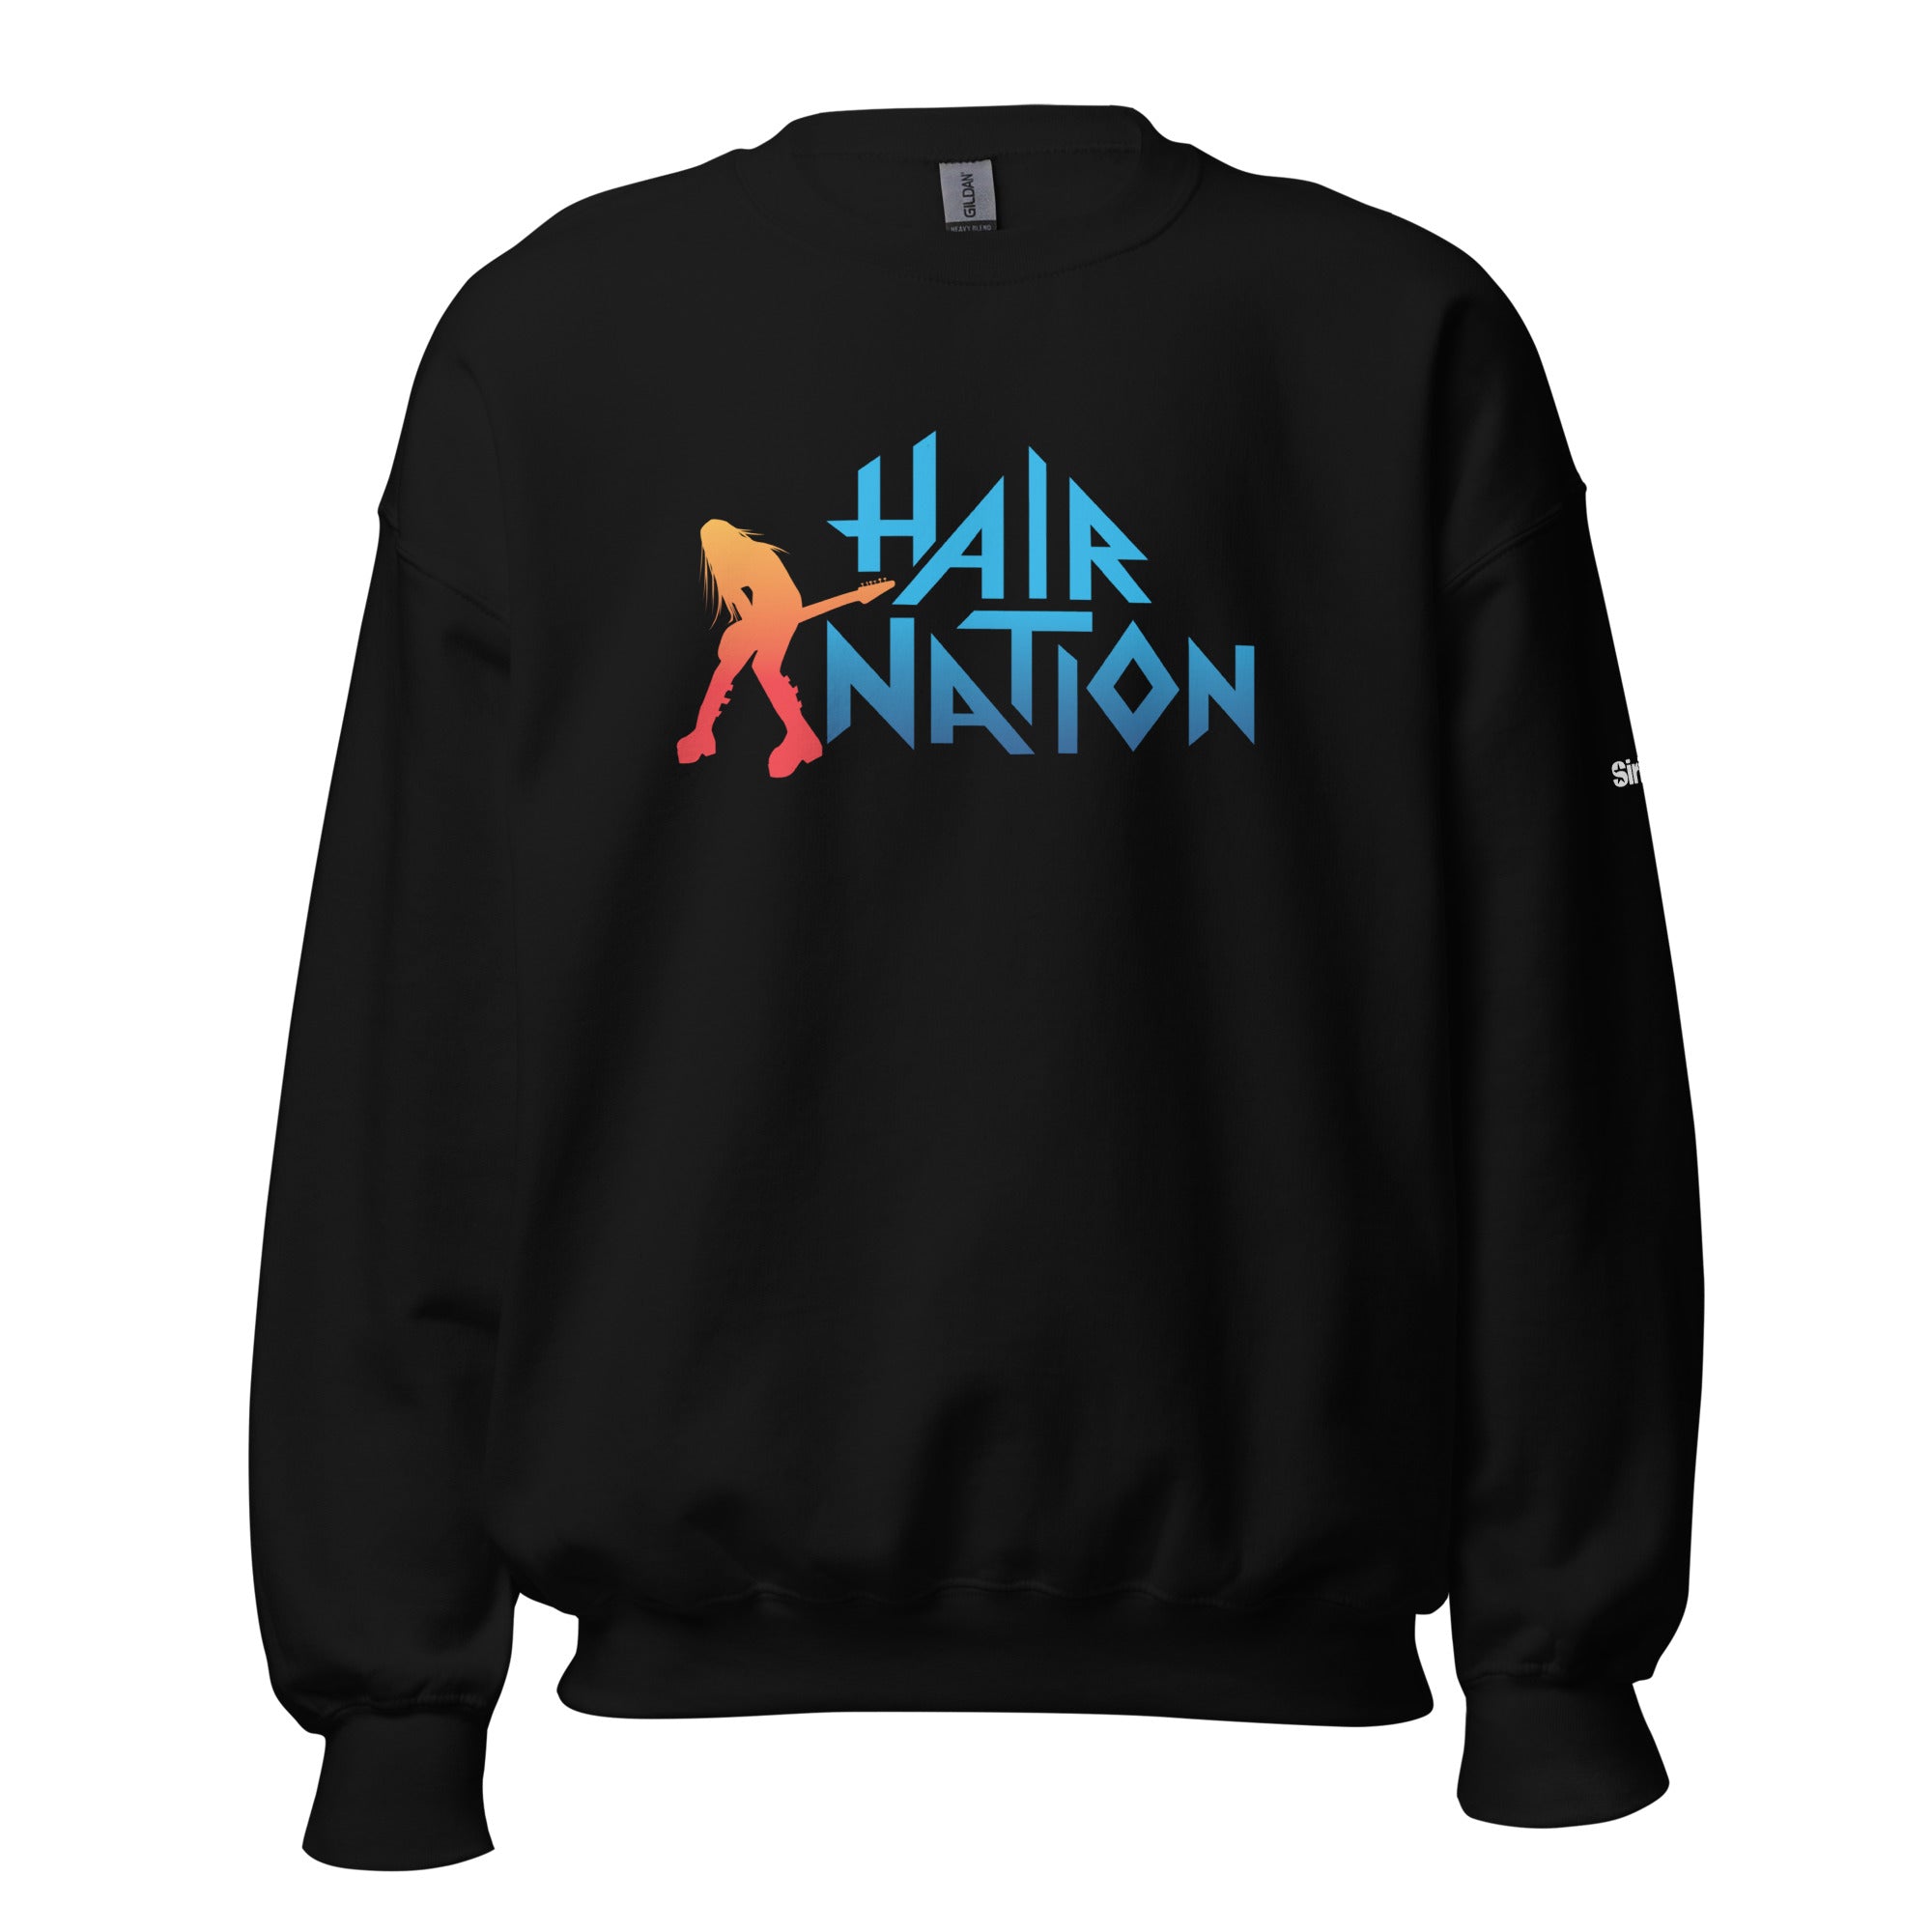 Hair Nation: Sweatshirt (Black)